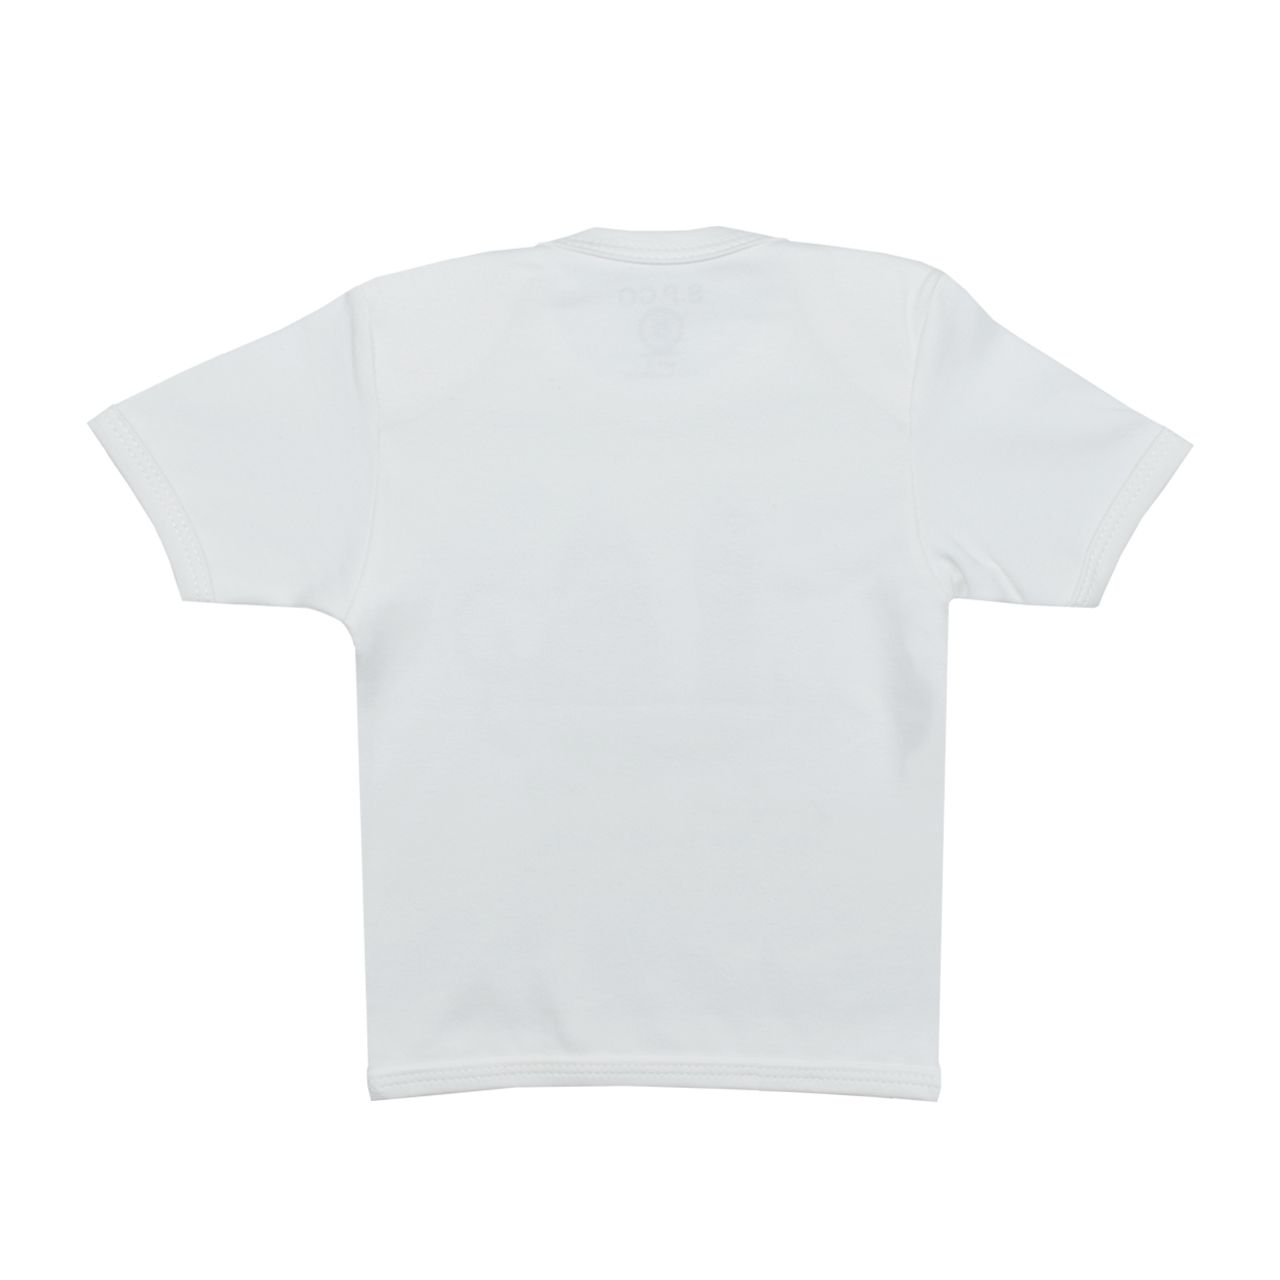 تی شرت آستین کوتاه نوزادی اسپیکو کد 301 -1 -  - 3